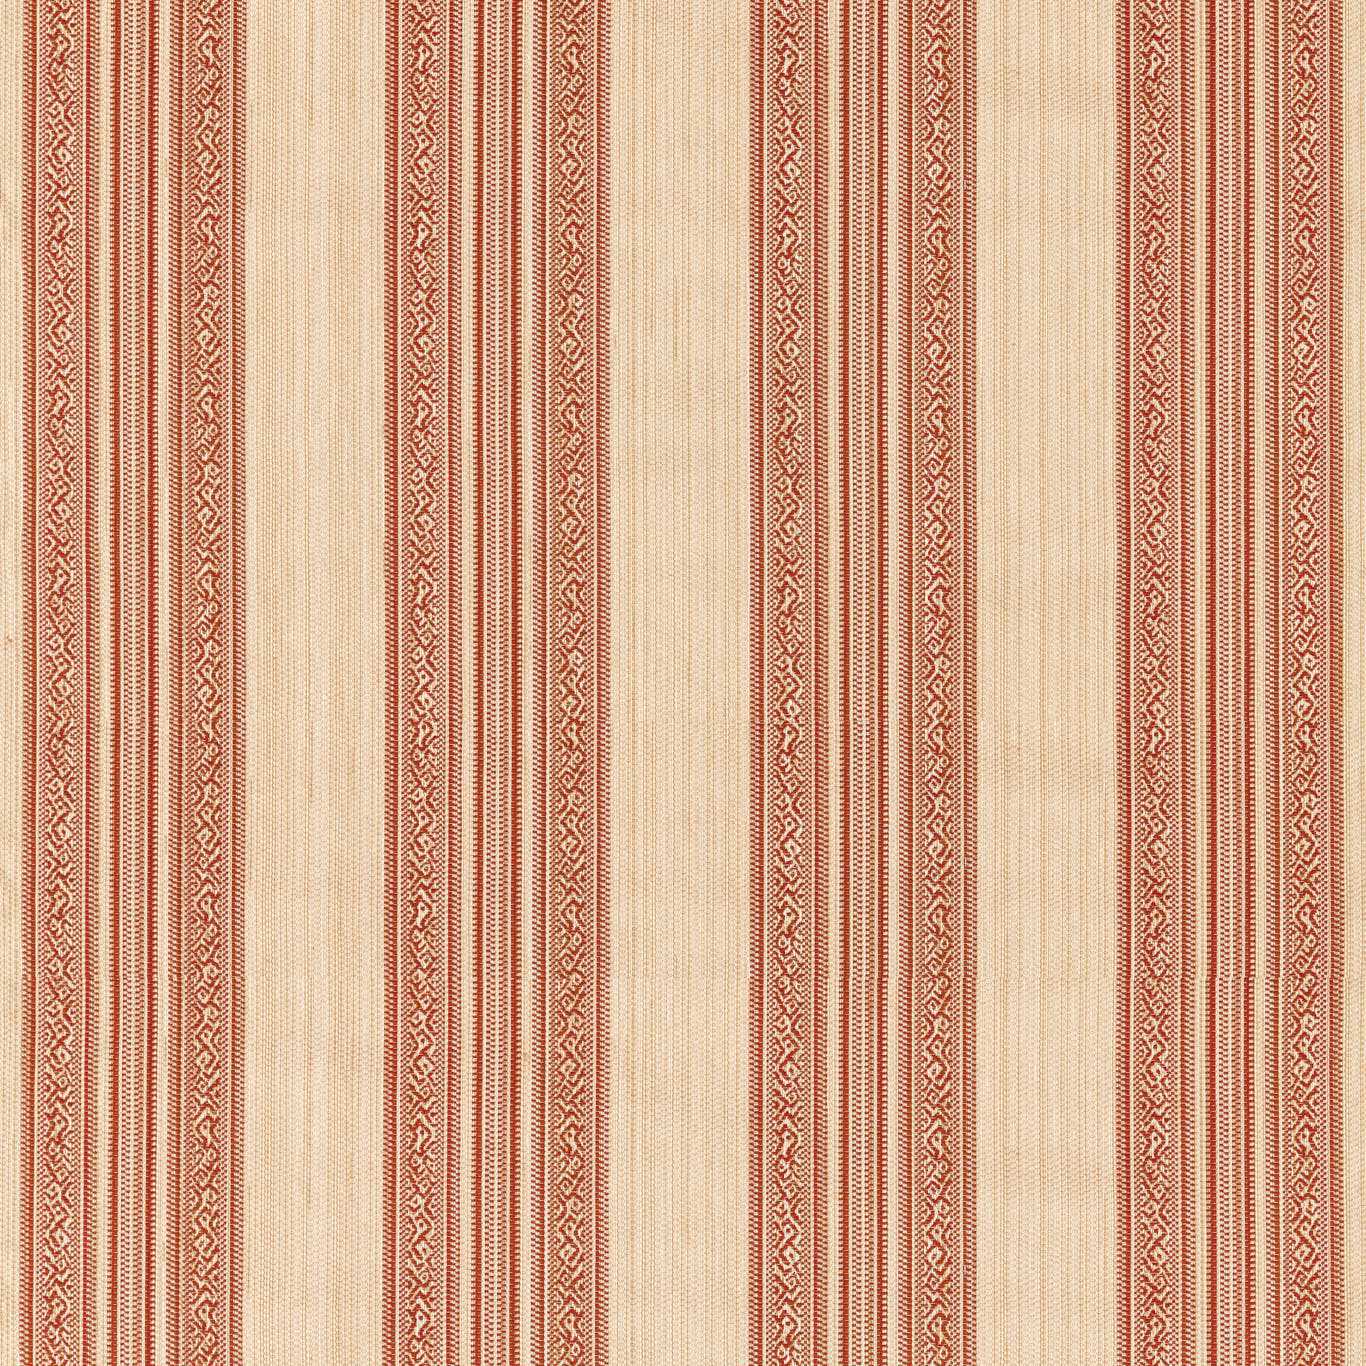 Hanover Stripe Amber Fabric by ZOF